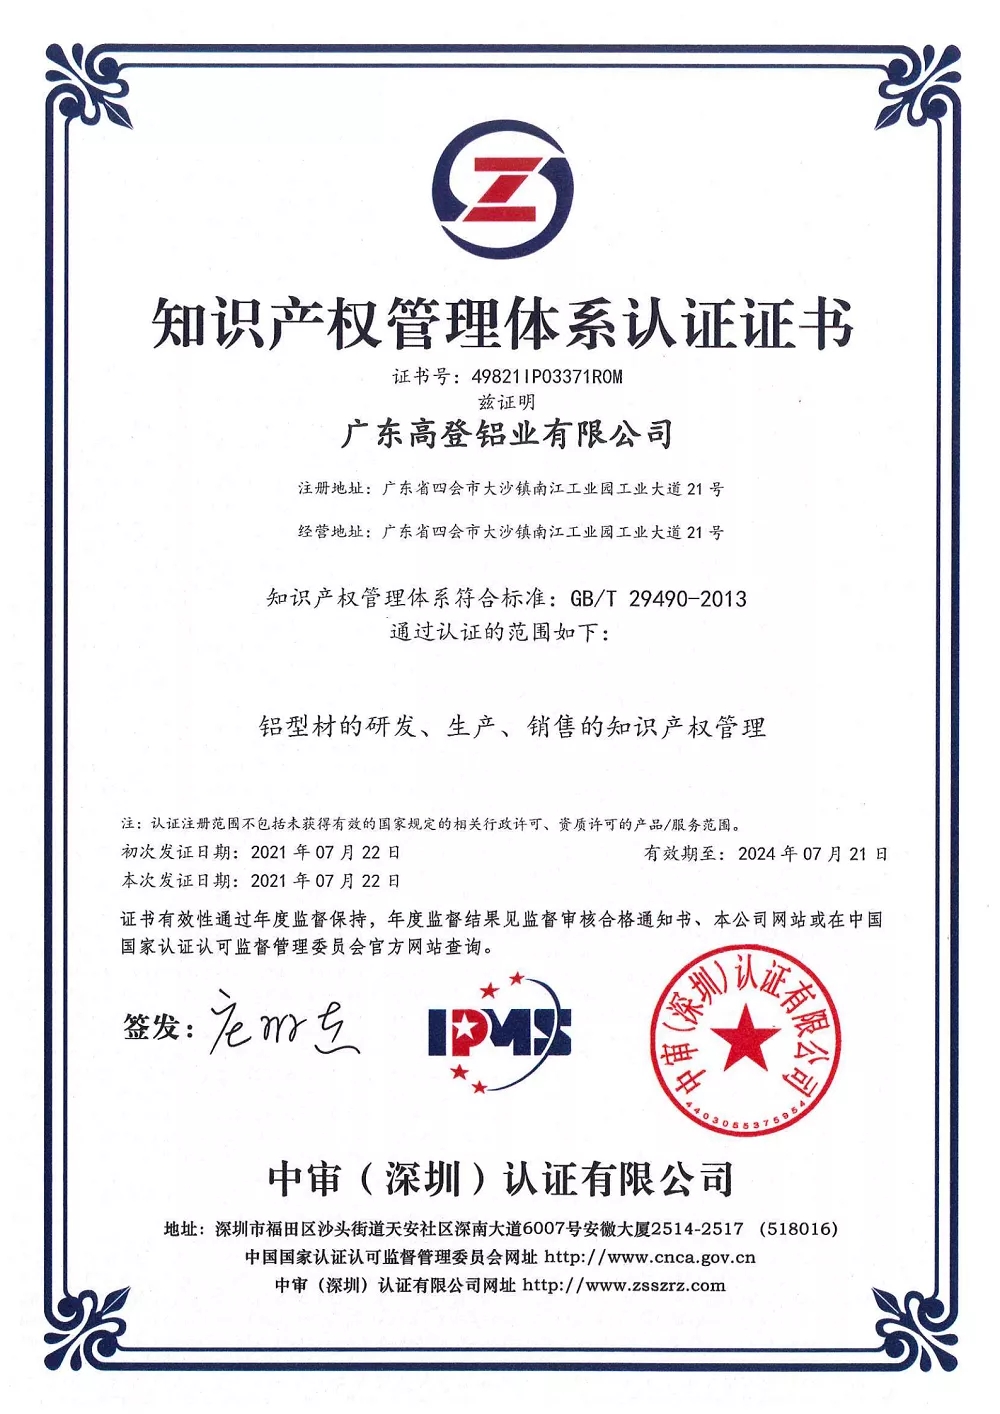 [good news] Golden aluminum won the intellectual property management system certification